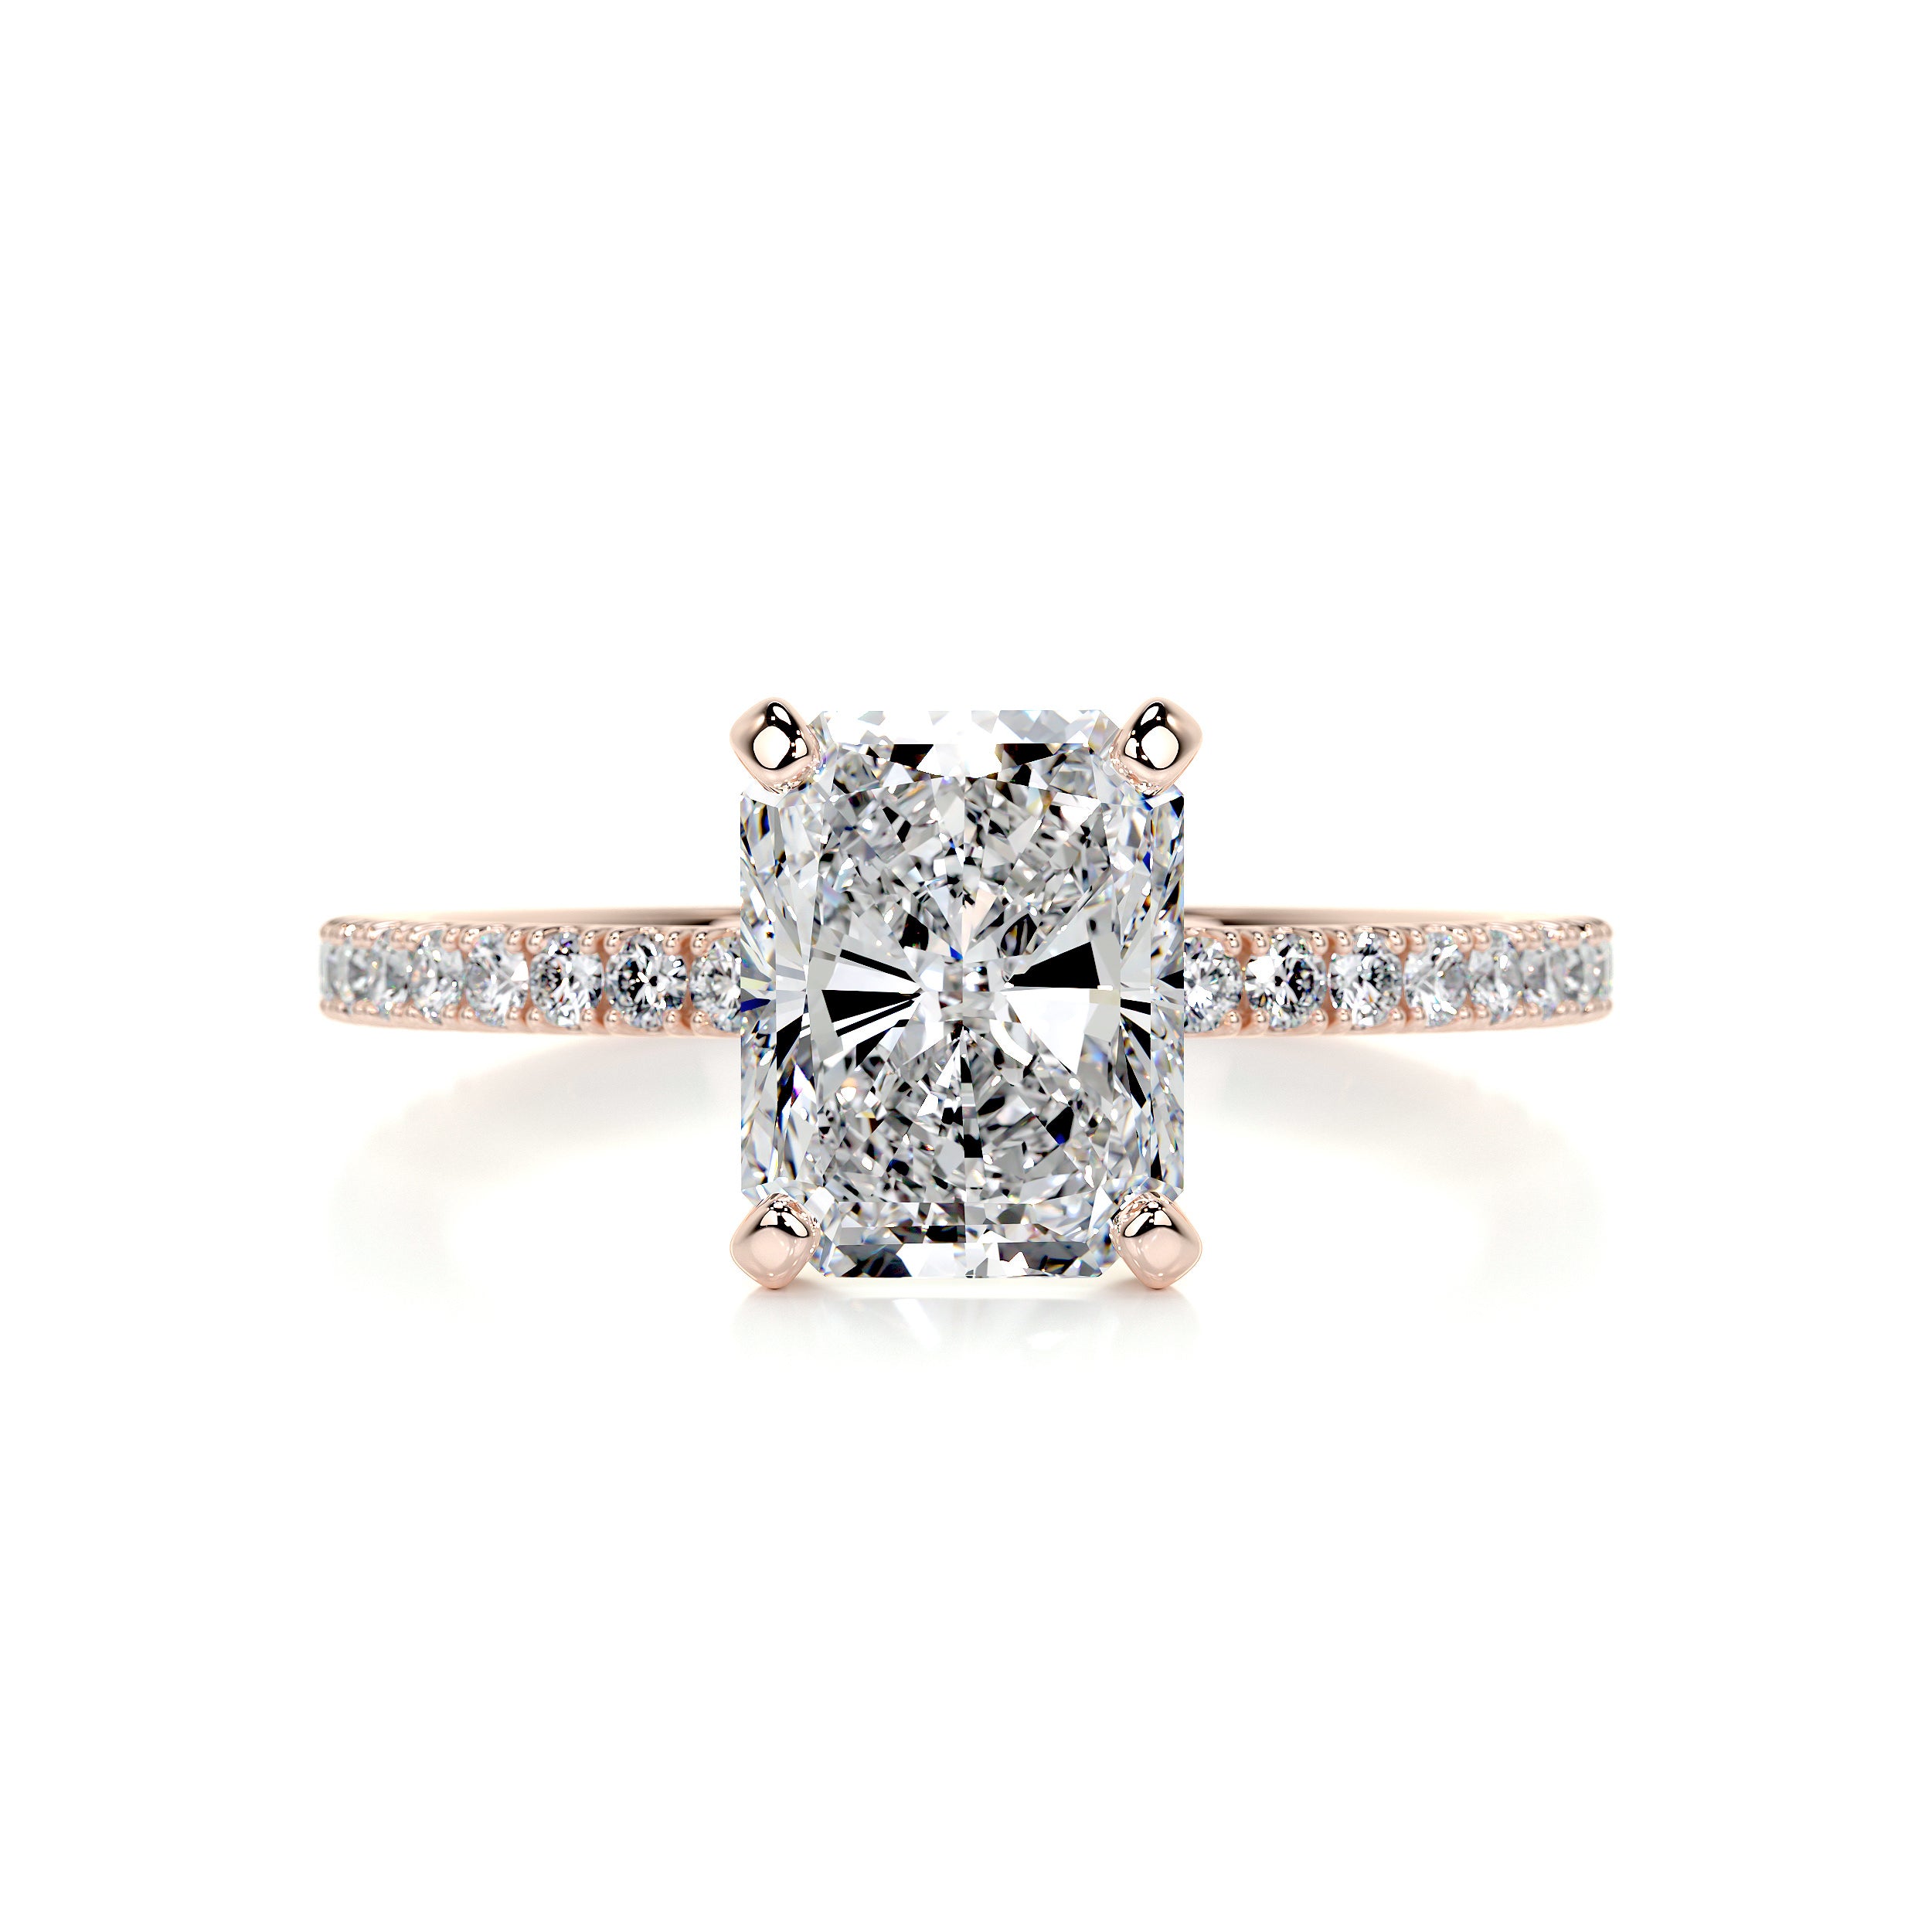 Audrey Diamond Engagement Ring -14K Rose Gold